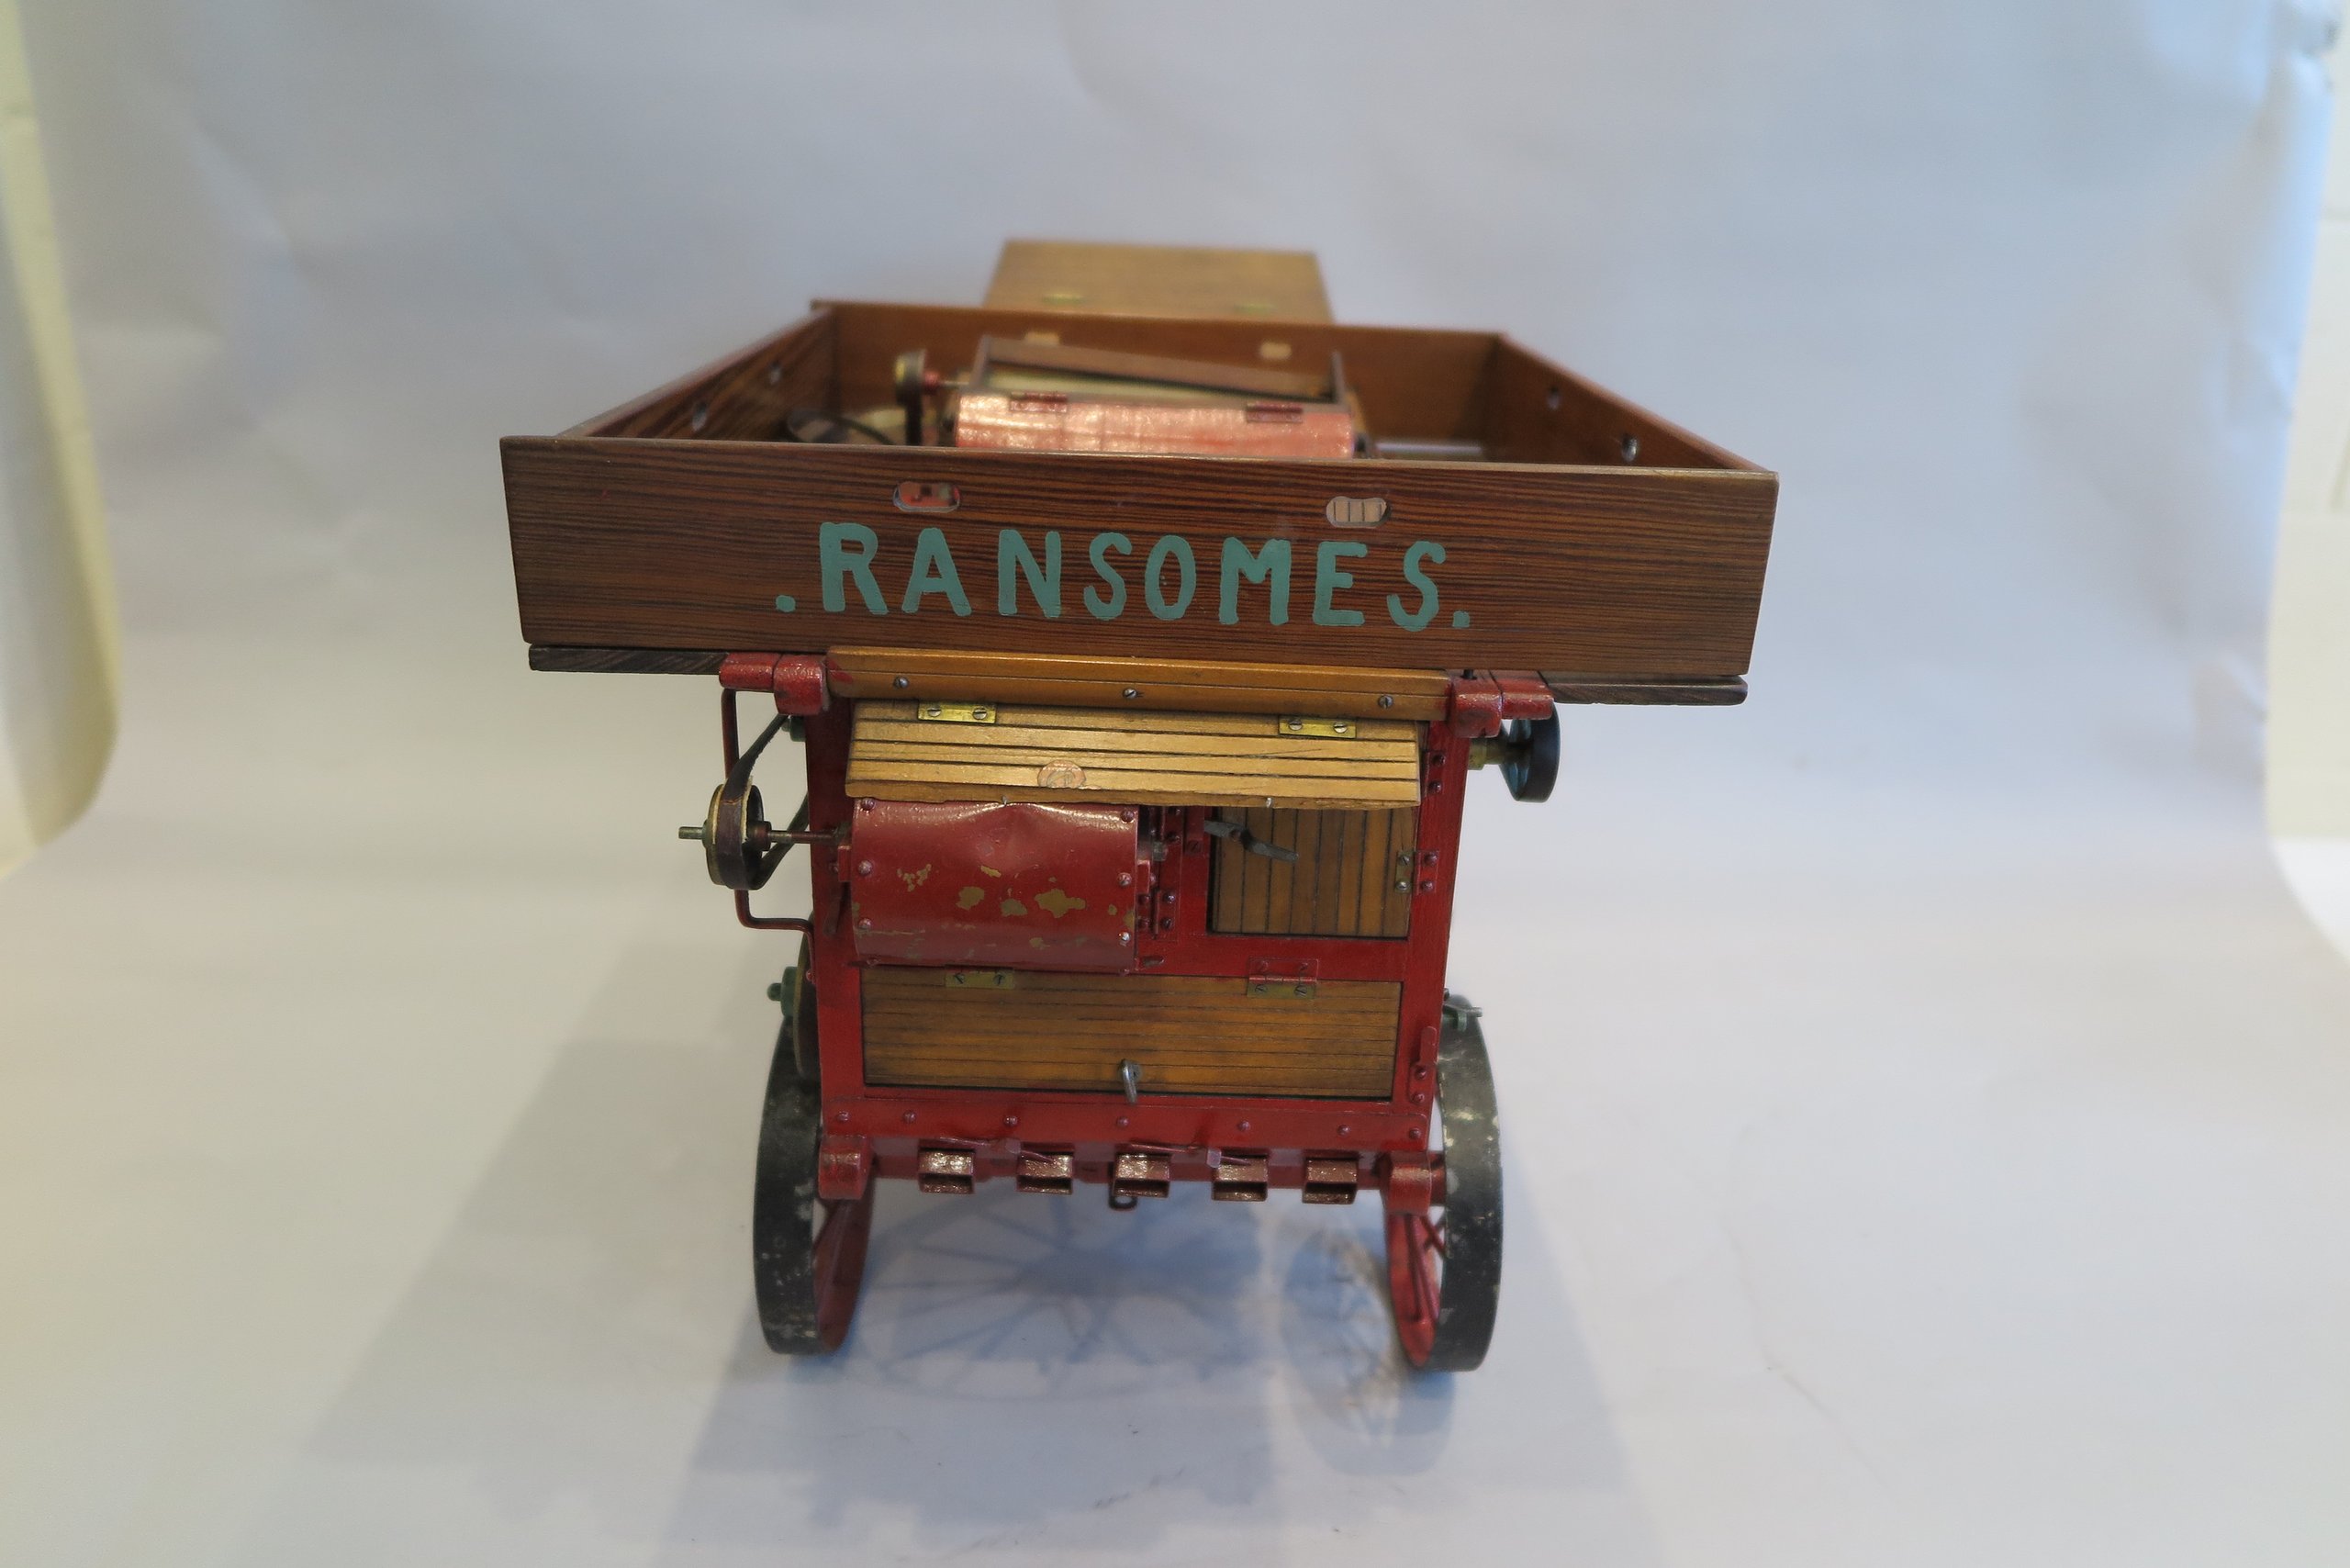 Model of Ransome's threshing machine made in 1931